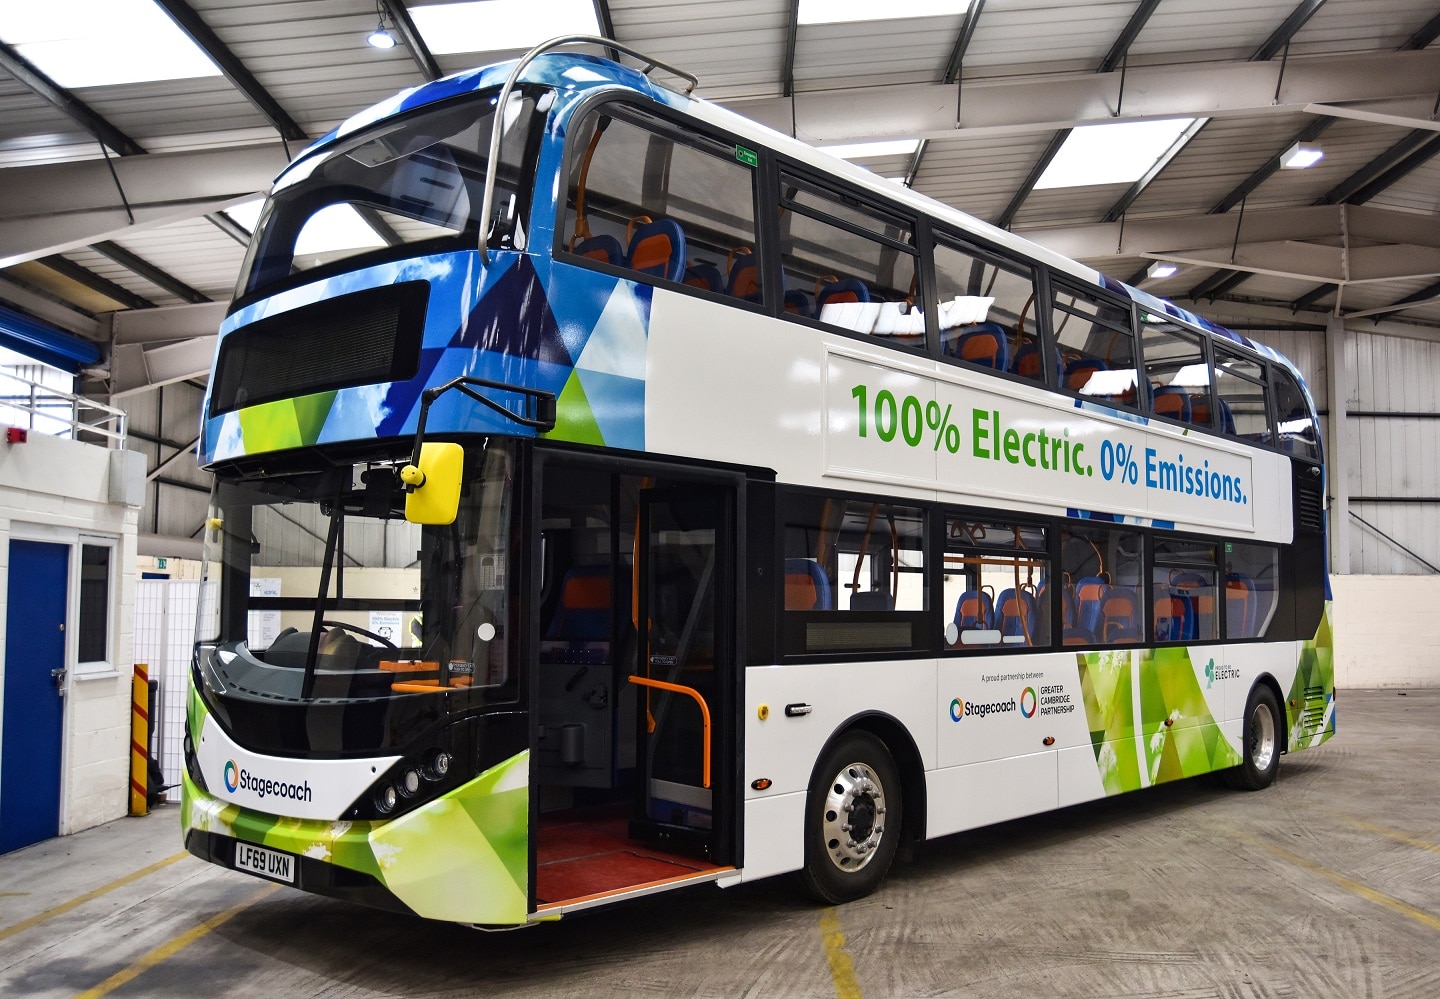 DfT ZEBRA scheme for zero-emission buses